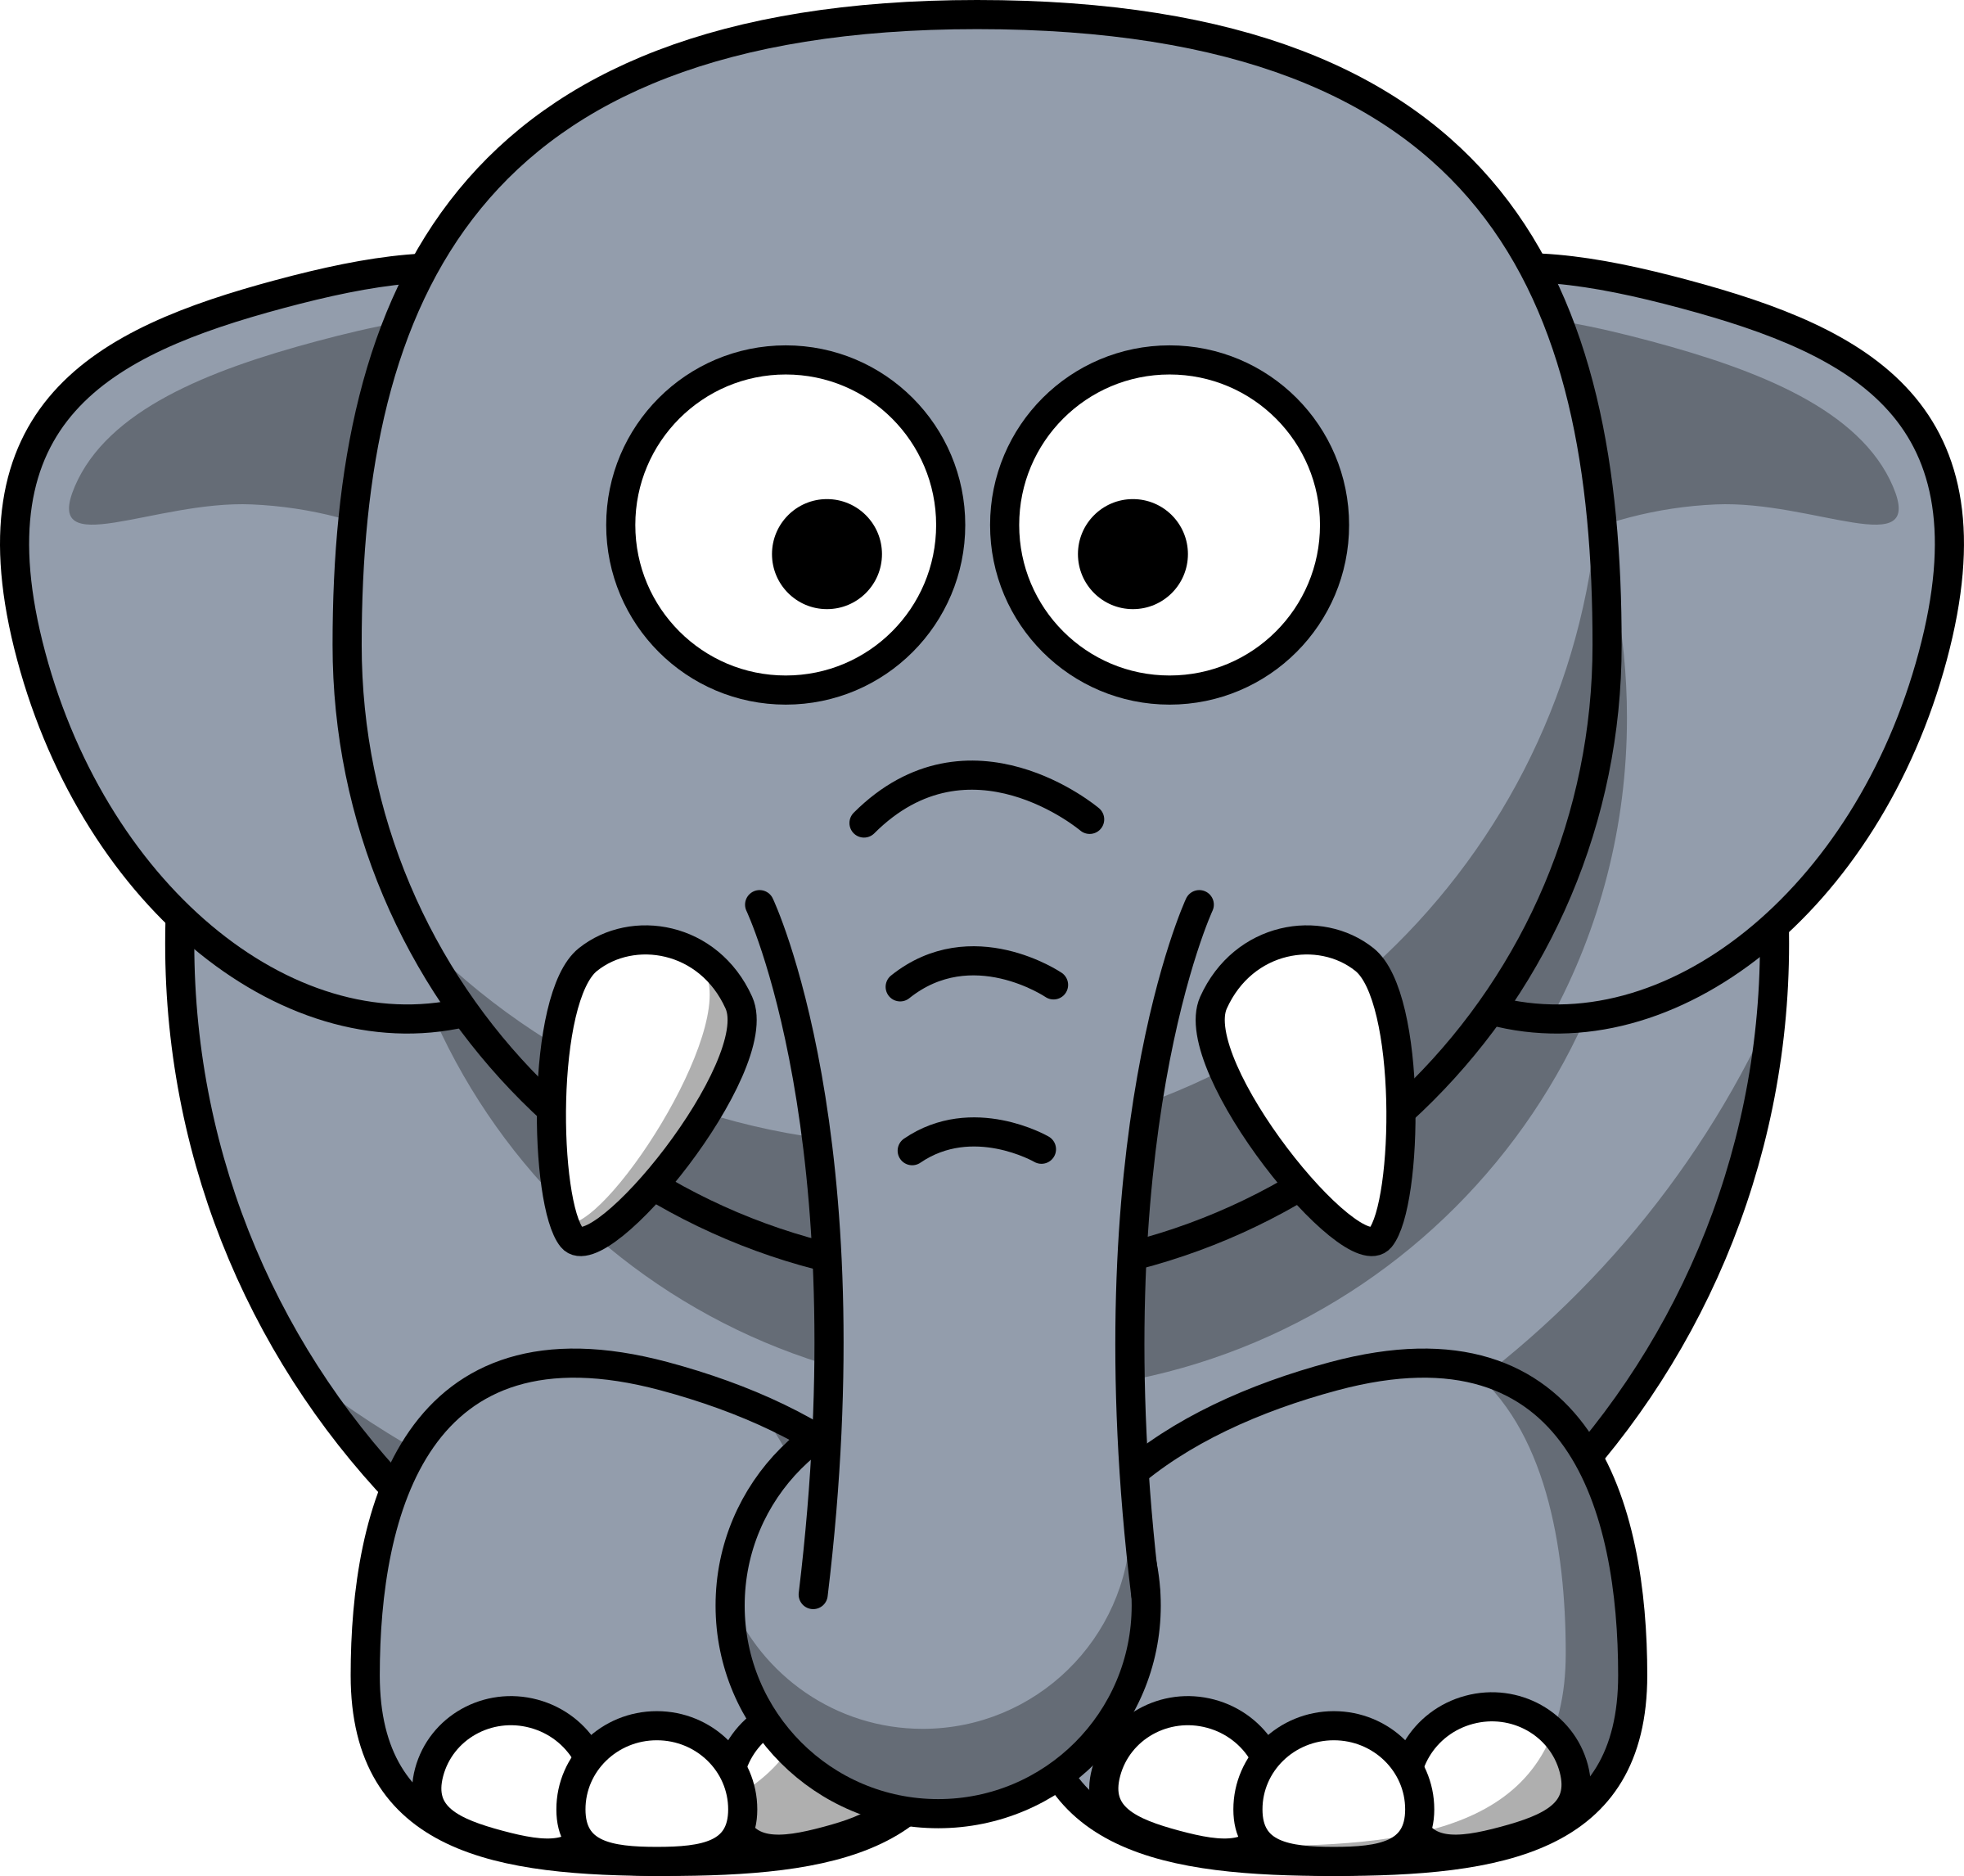 A big cartoon elephant